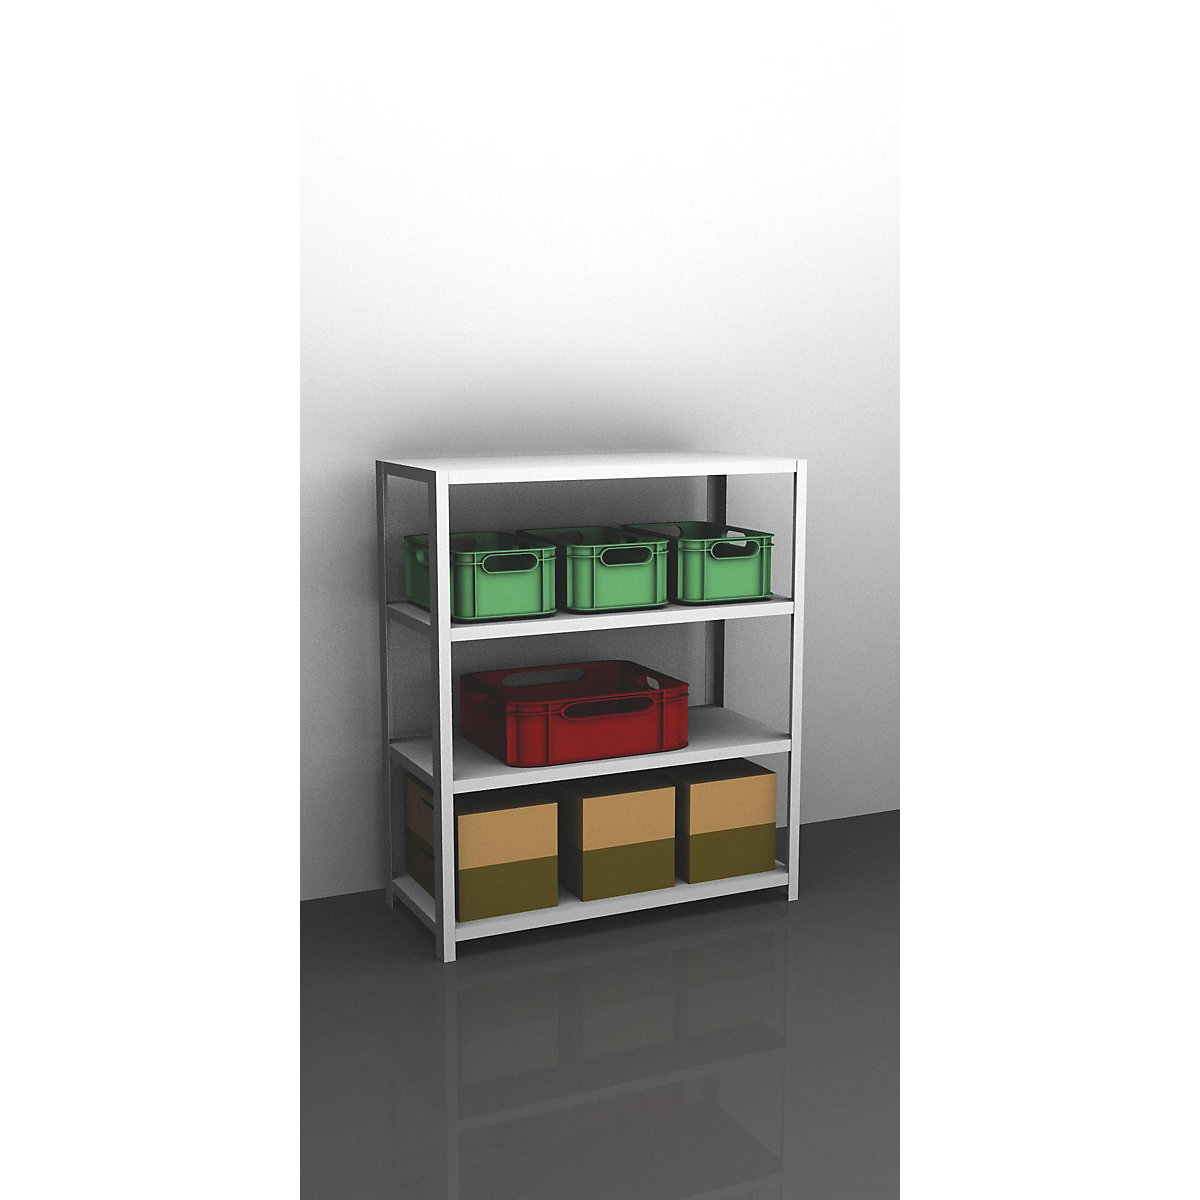 Bolt-together shelf unit, light duty, plastic coated – eurokraft pro, shelf unit height 1500 mm, shelf width 1300 mm, depth 600 mm, standard shelf unit-9